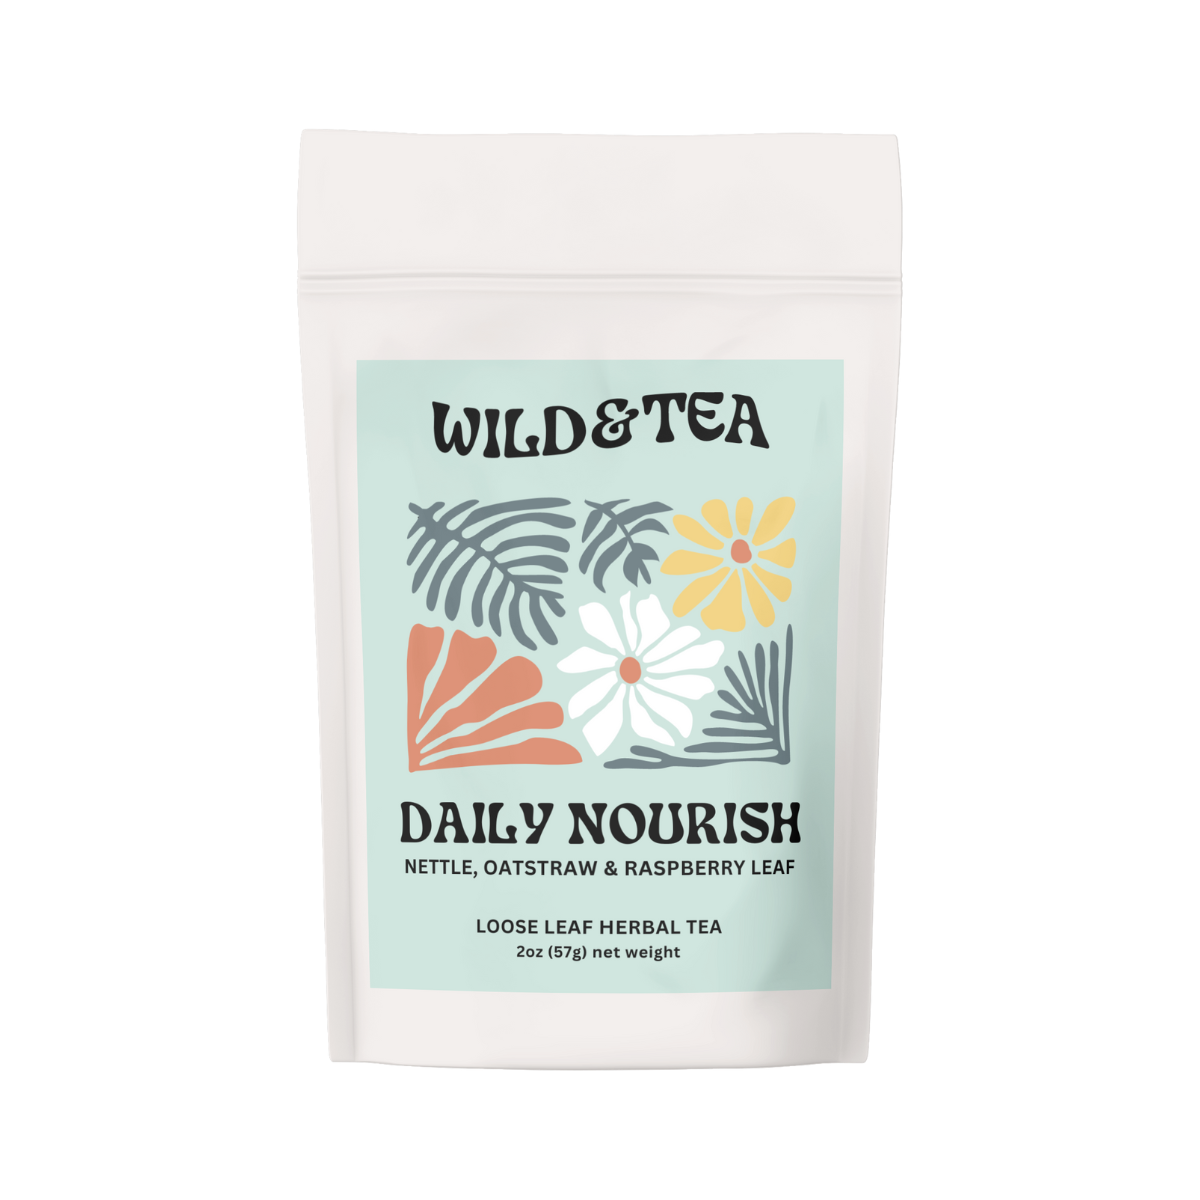 Daily Nourish Herbal Tea